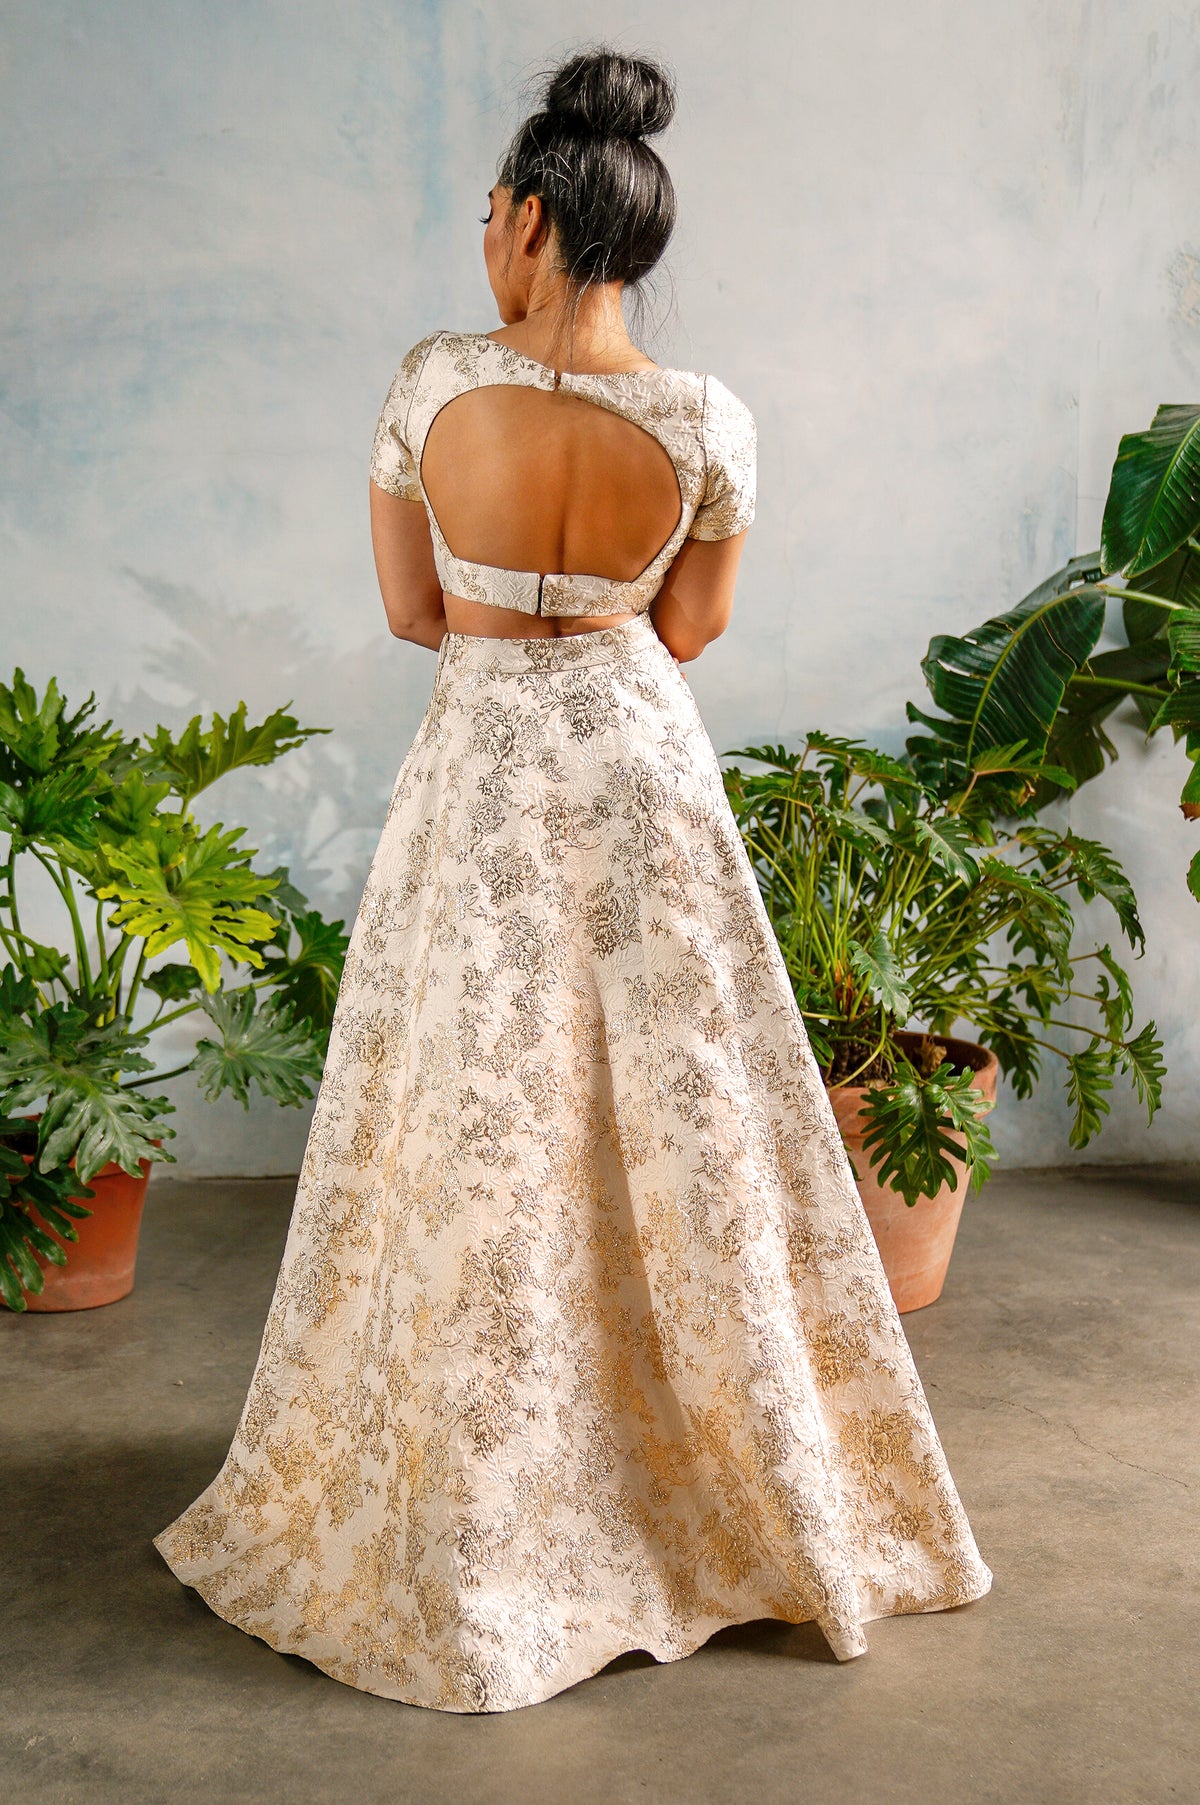 RIVA Pastel Floral Jacquard Crop Top - Back View - Harleen Kaur - South Asian Womenswear